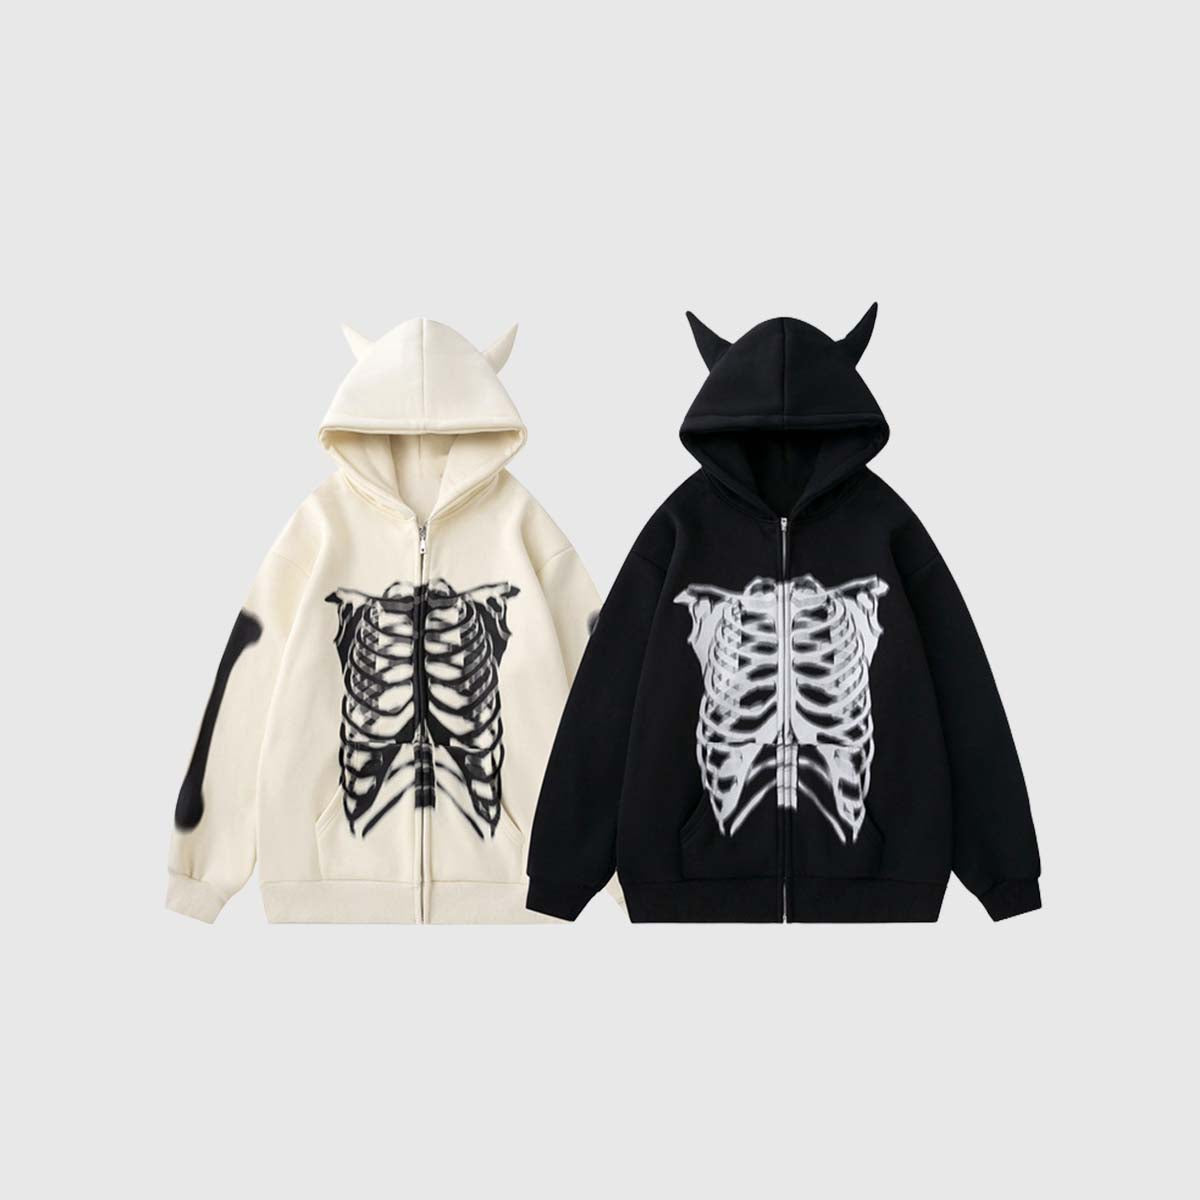 Variety of unisex skeleton print hoodies in different colors